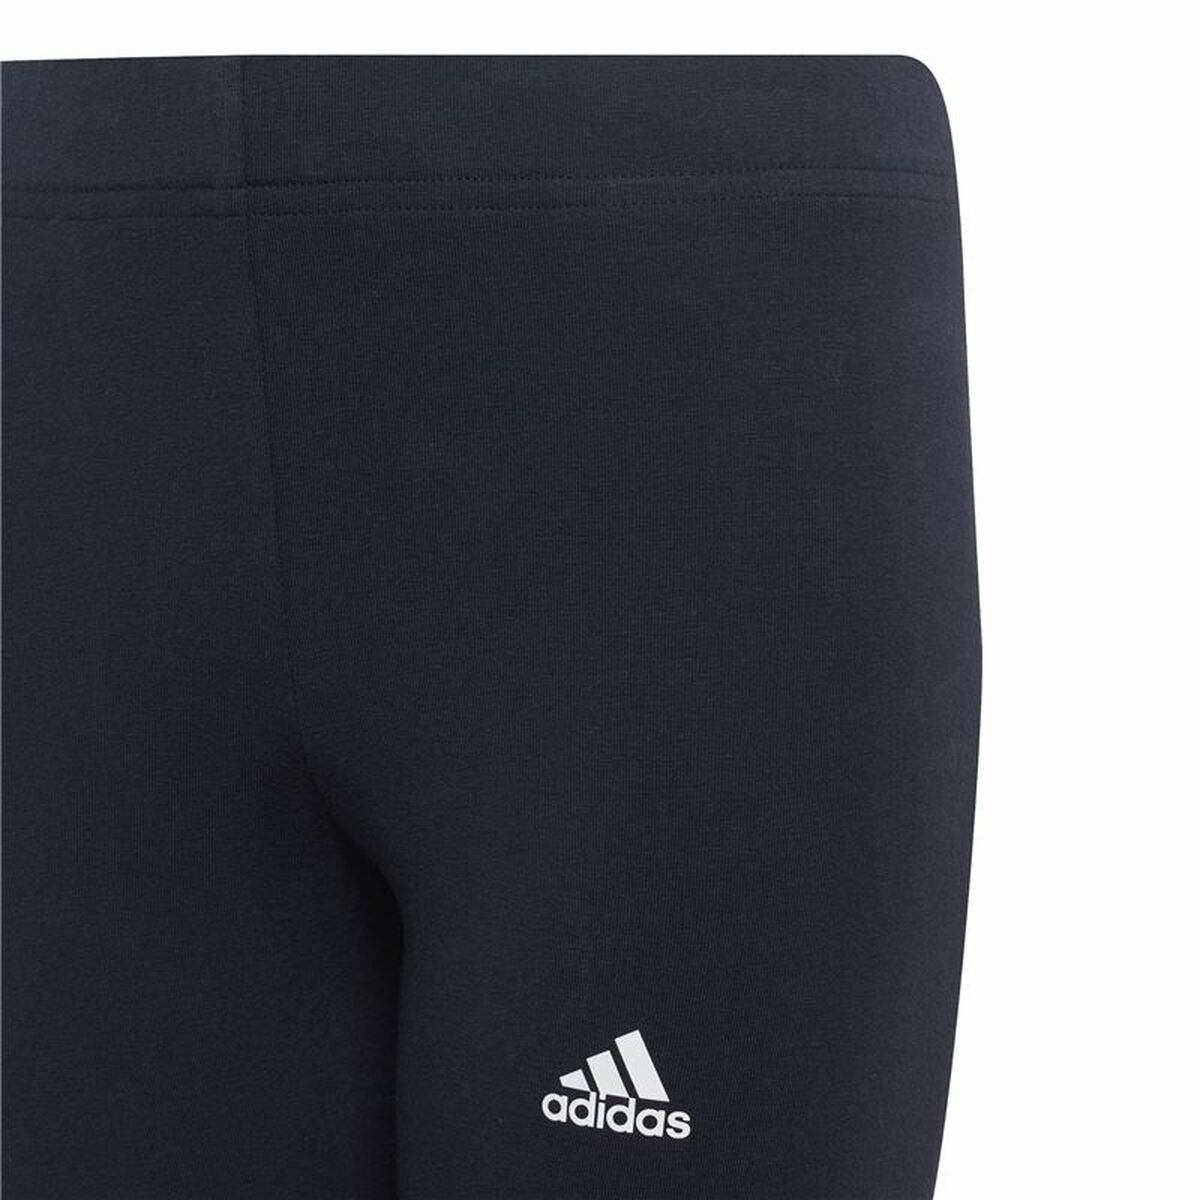 Sports Leggings Adidas Essentials Ink Navy Blue